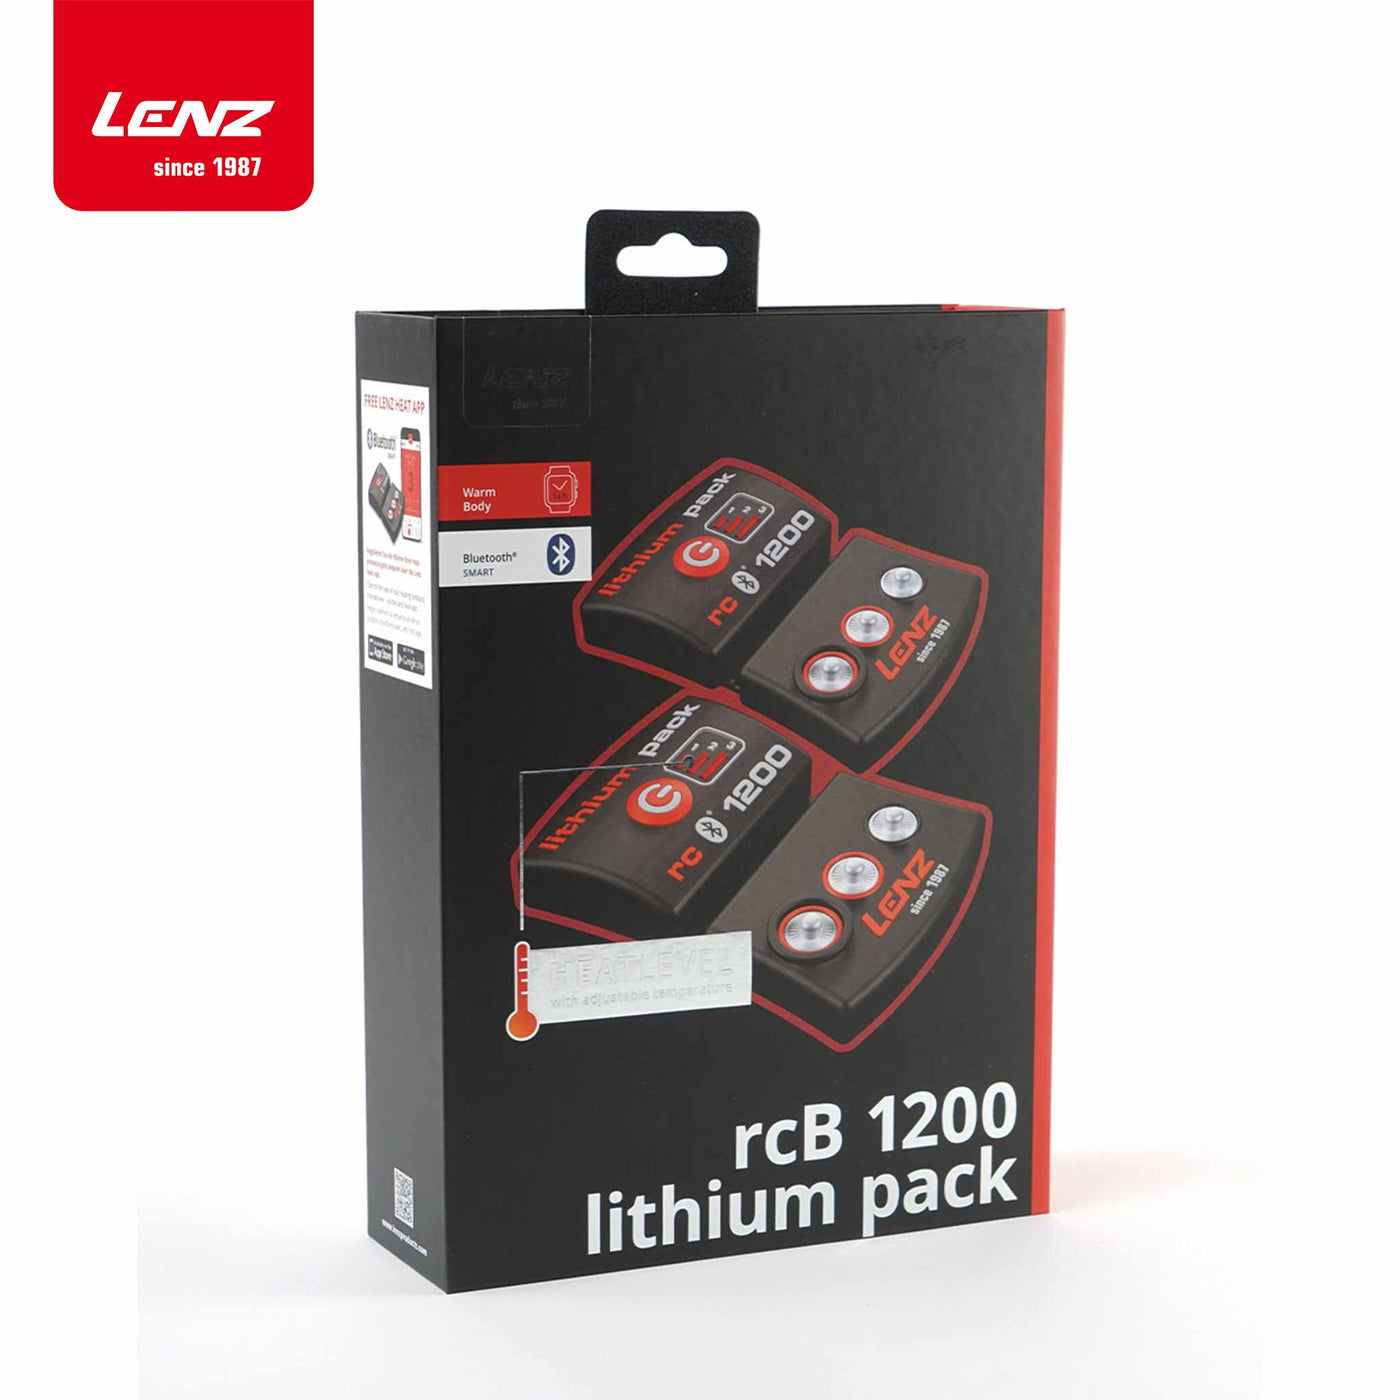 Lenz Lithium Pack rcB 1200 Box